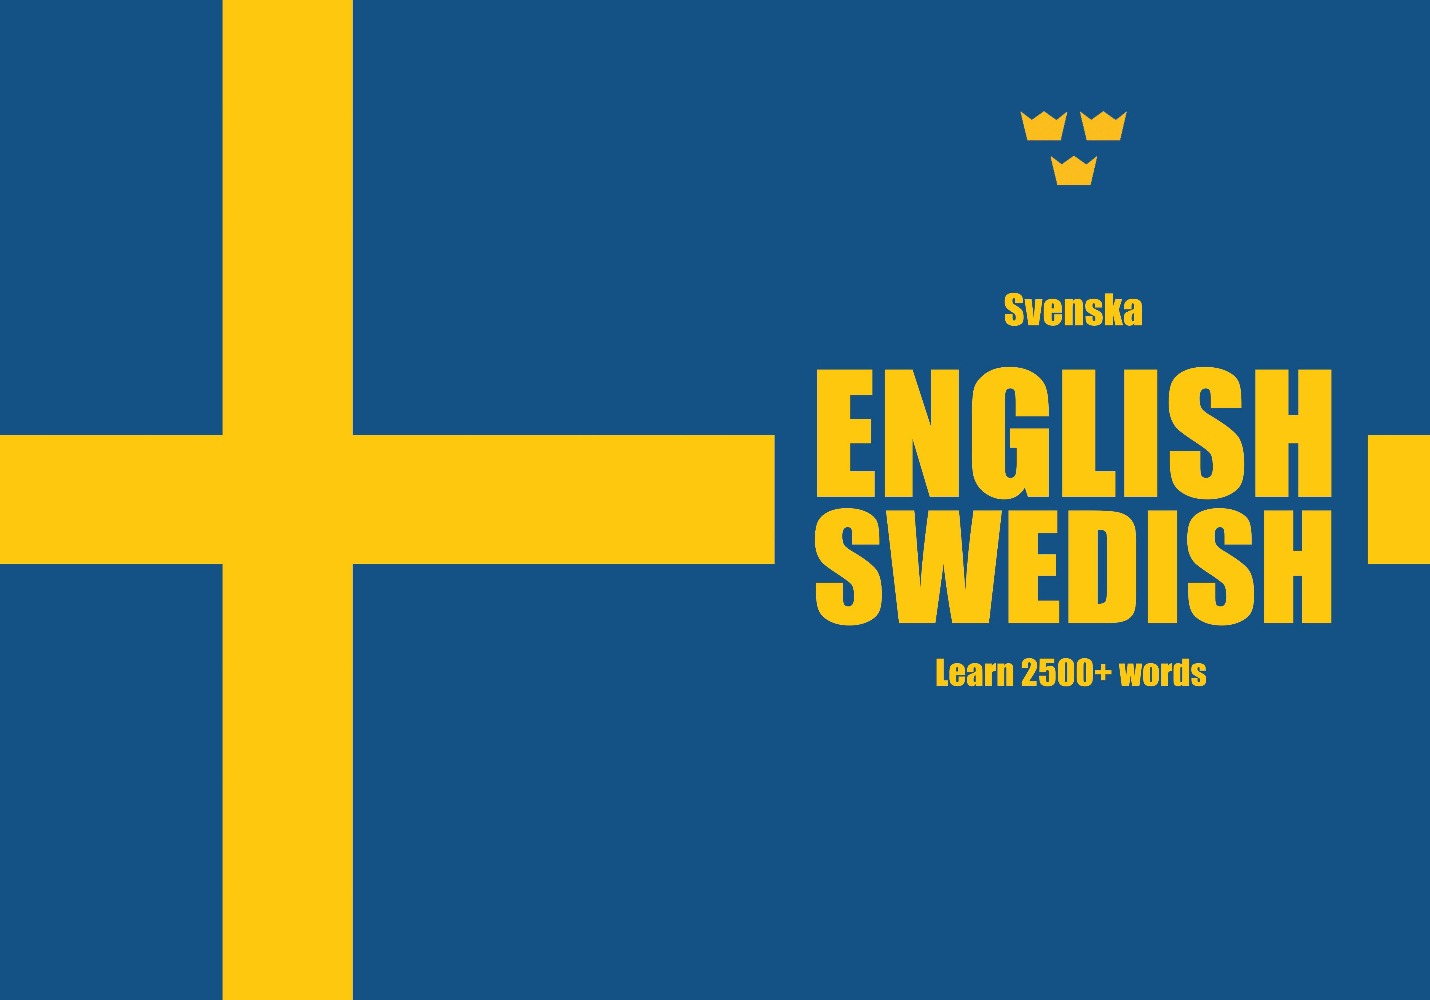 Swedish language learning notebook cover